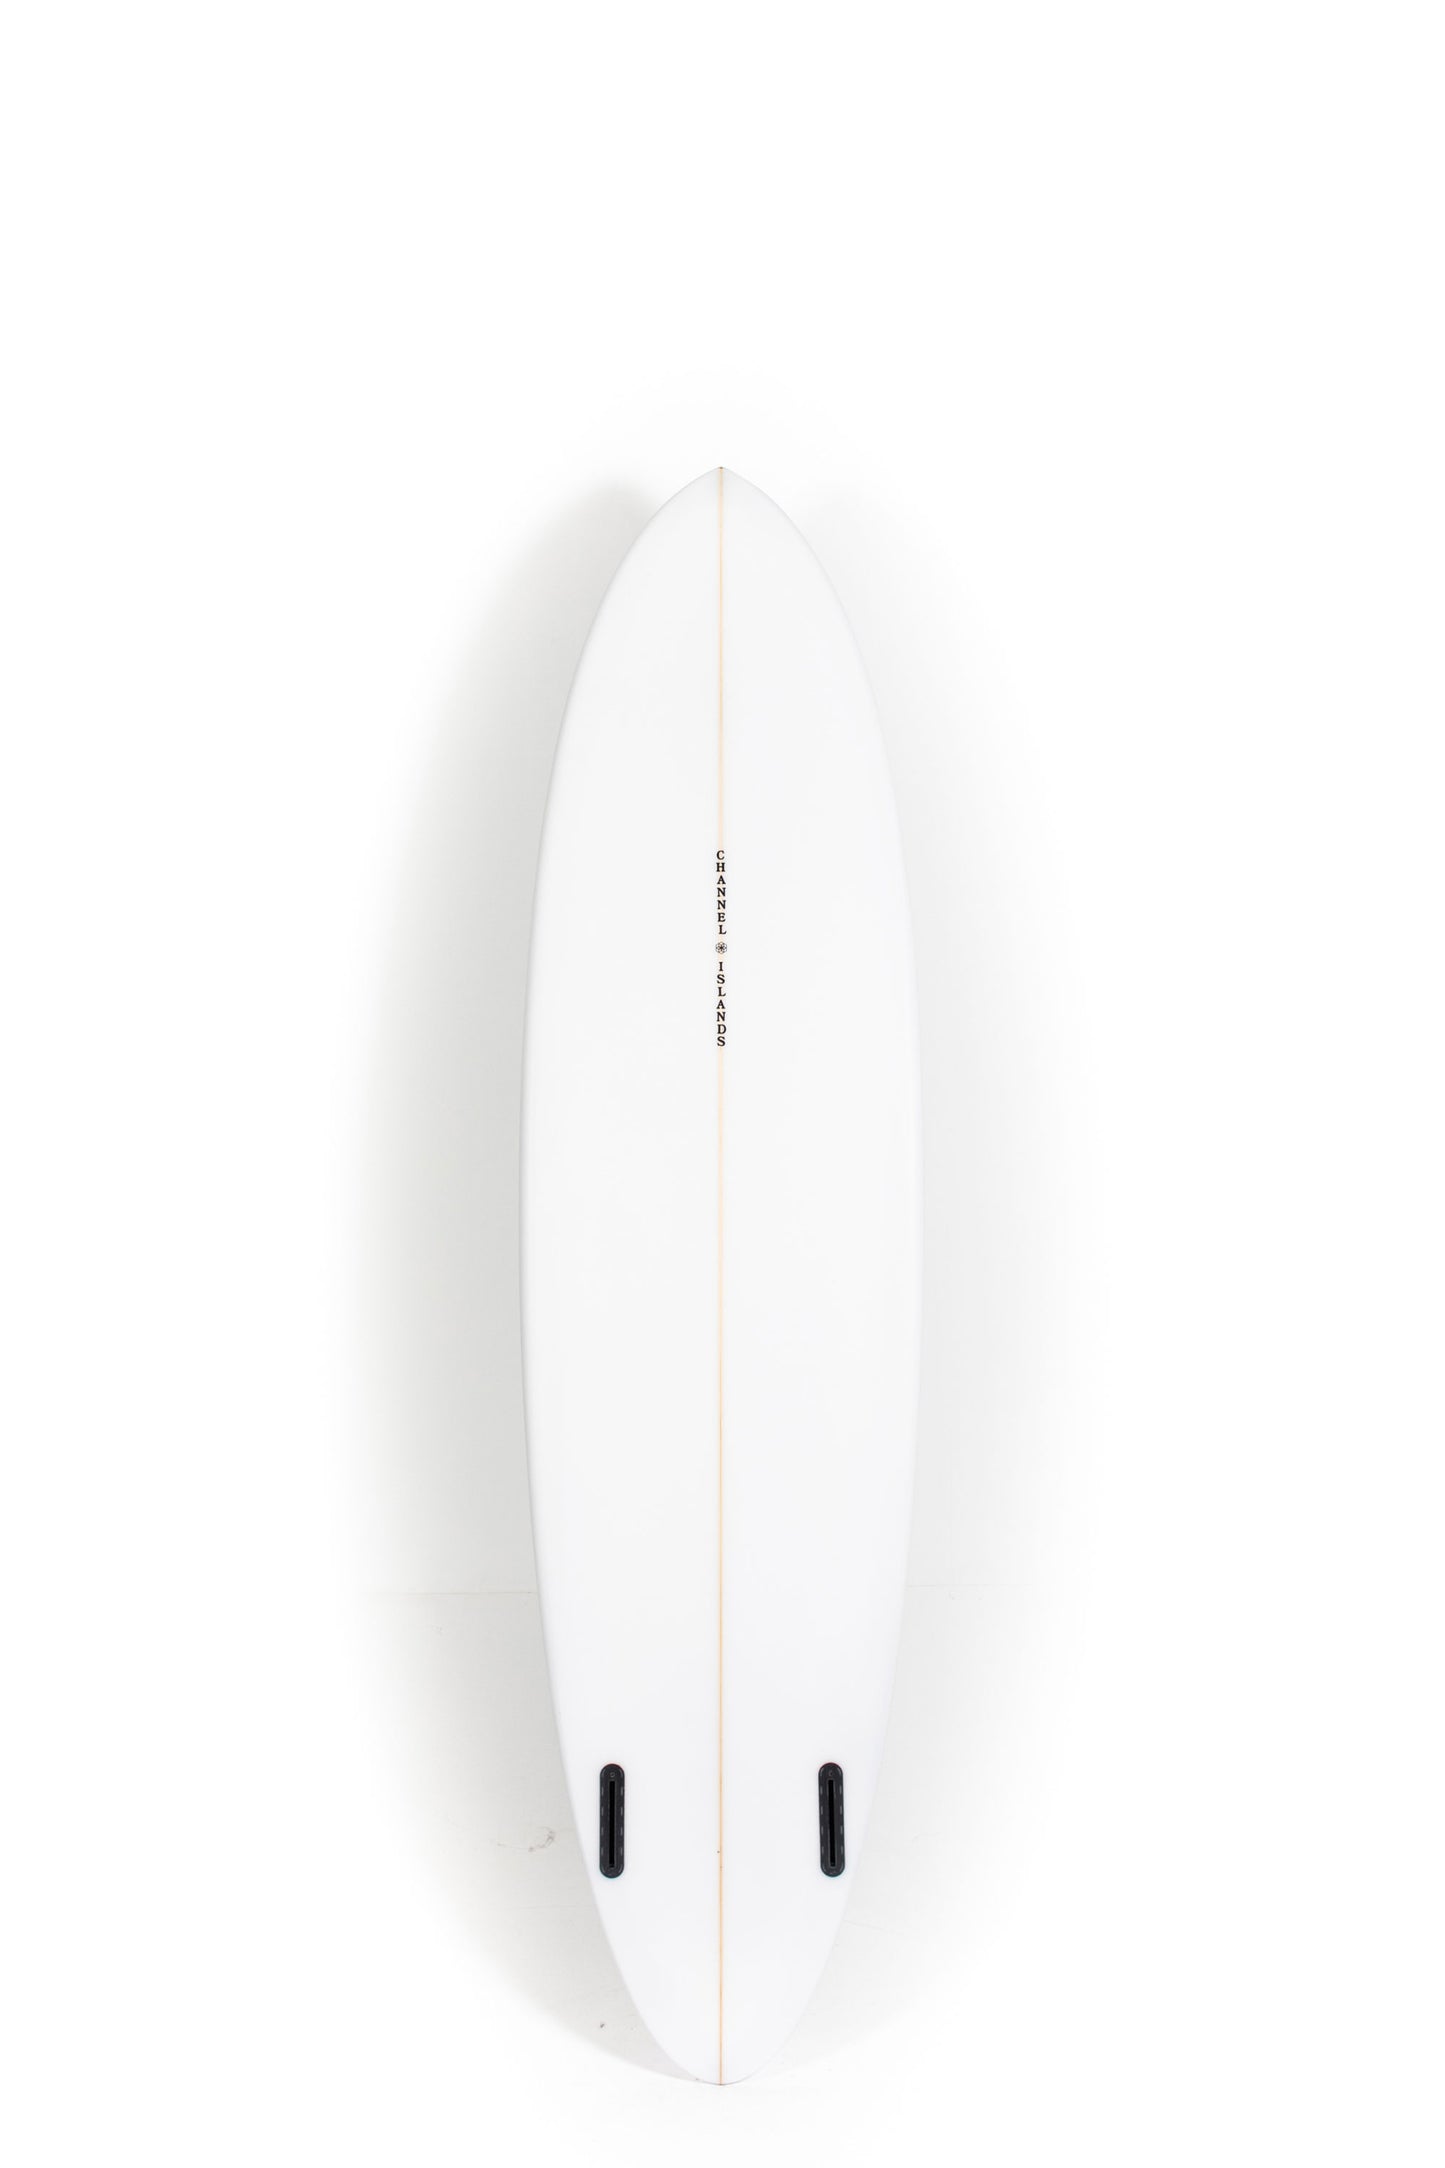 Pukas Surf Shop - Channel Islands - CI MID TWIN - 7'2" x 21 1/4 x 2 13/16 - 47,3L - CI28633